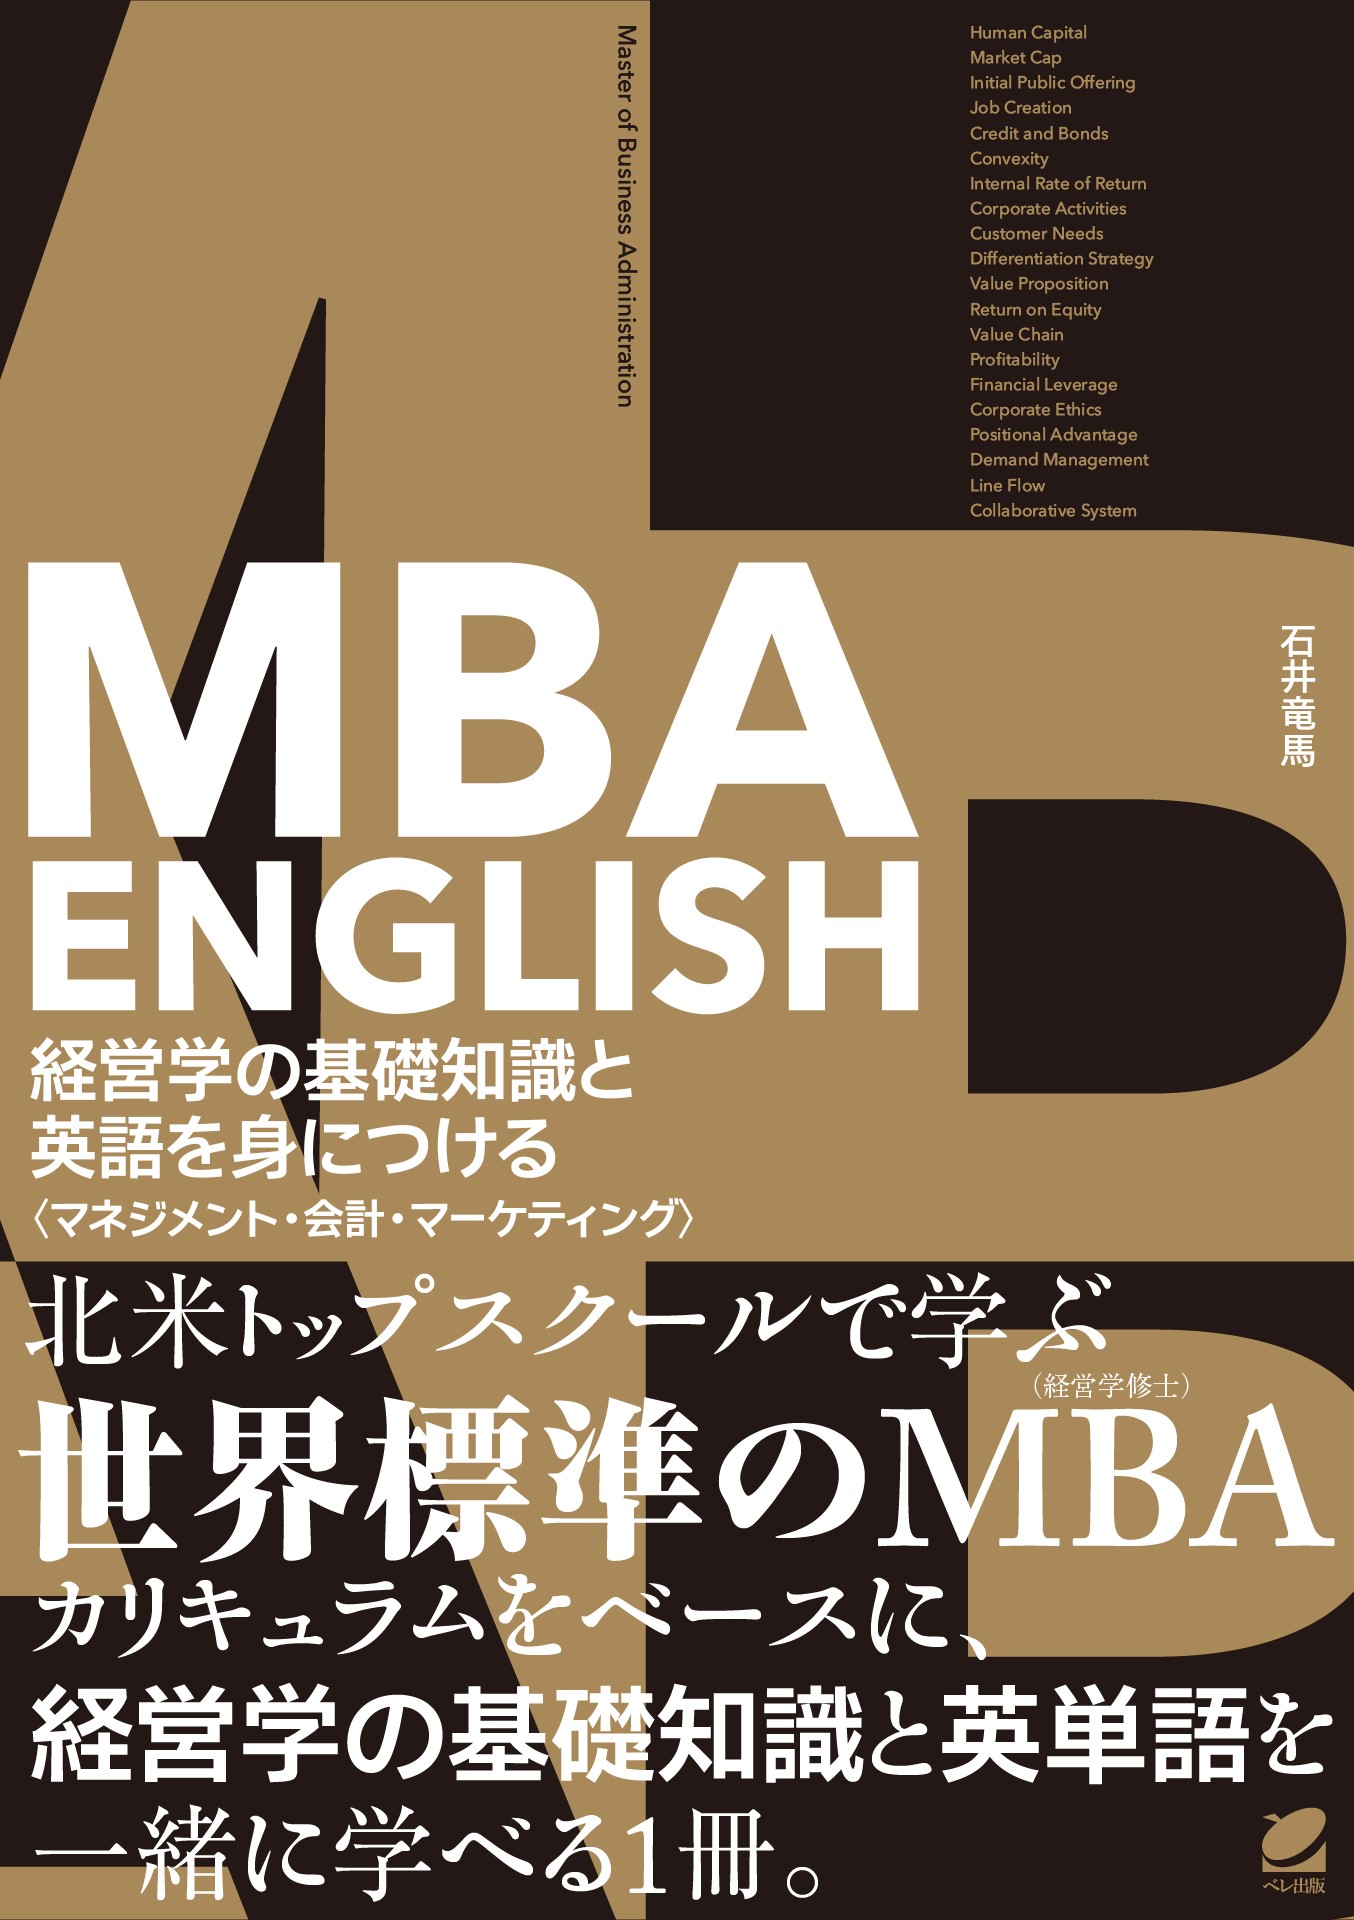 MBA ENGLISH 経営学の基礎知識と英語を身につける - いつも、学ぶ人の